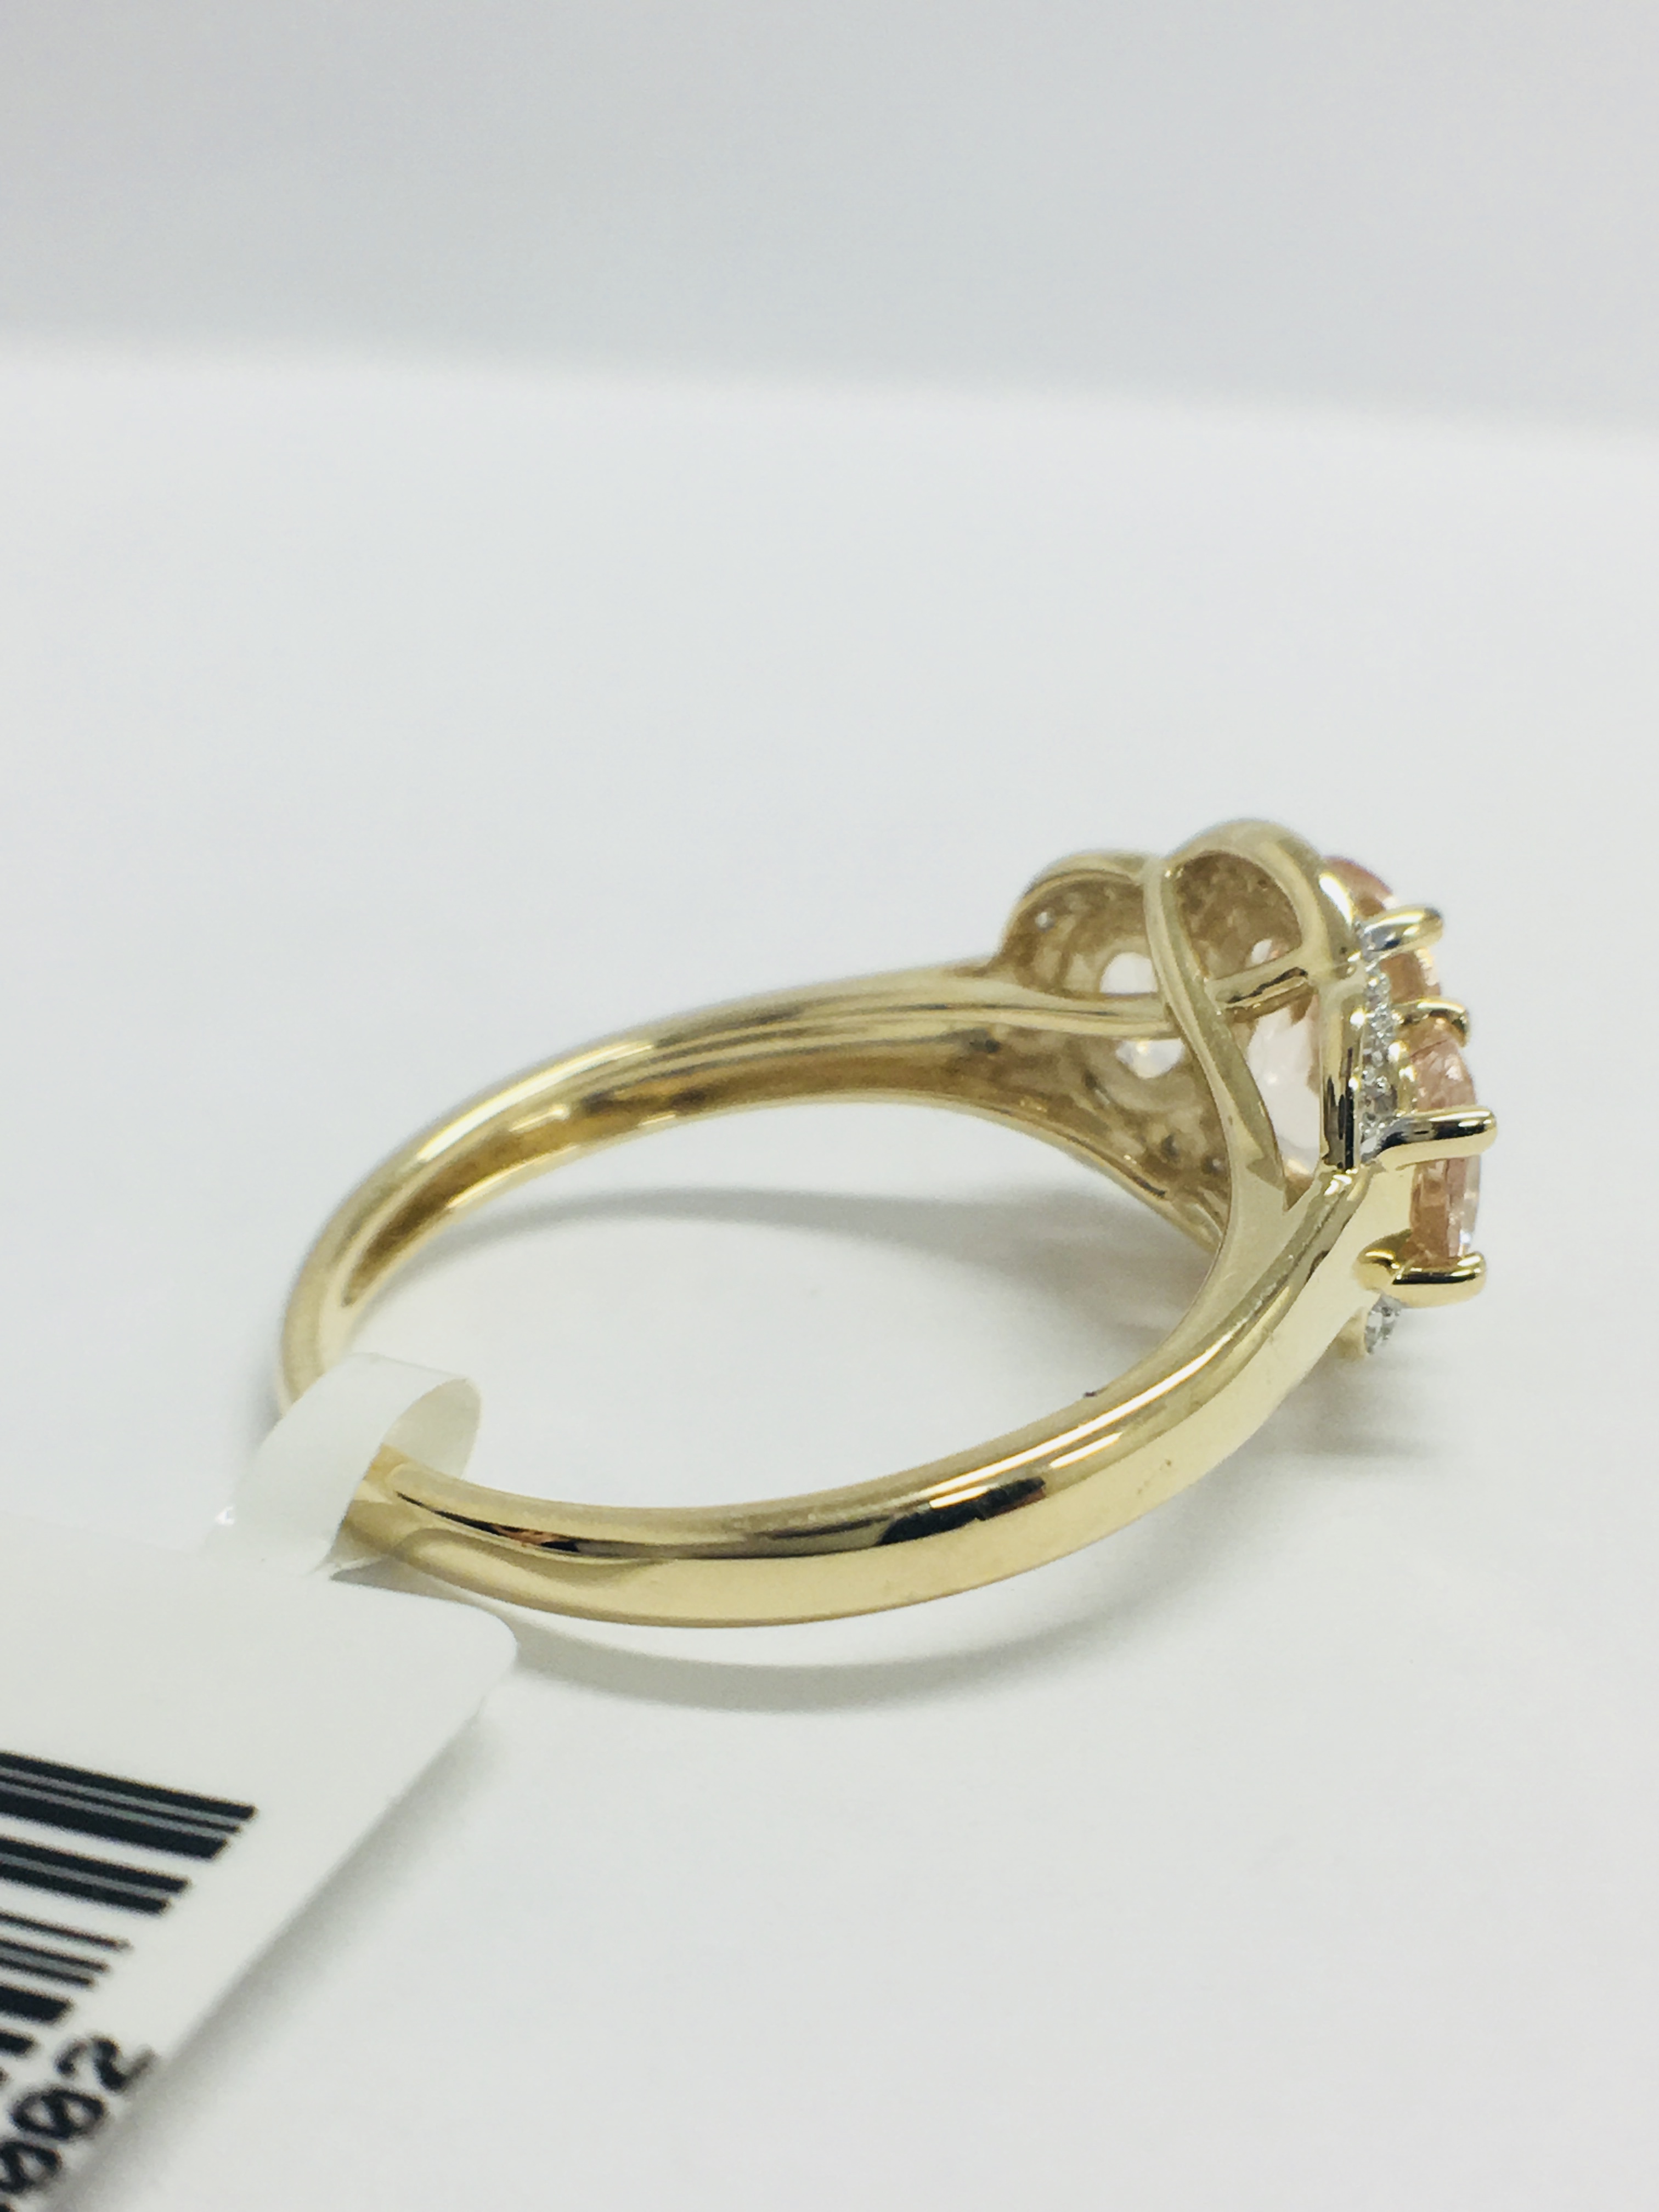 9ct yellow gold morganite and diamond ring - Image 8 of 11